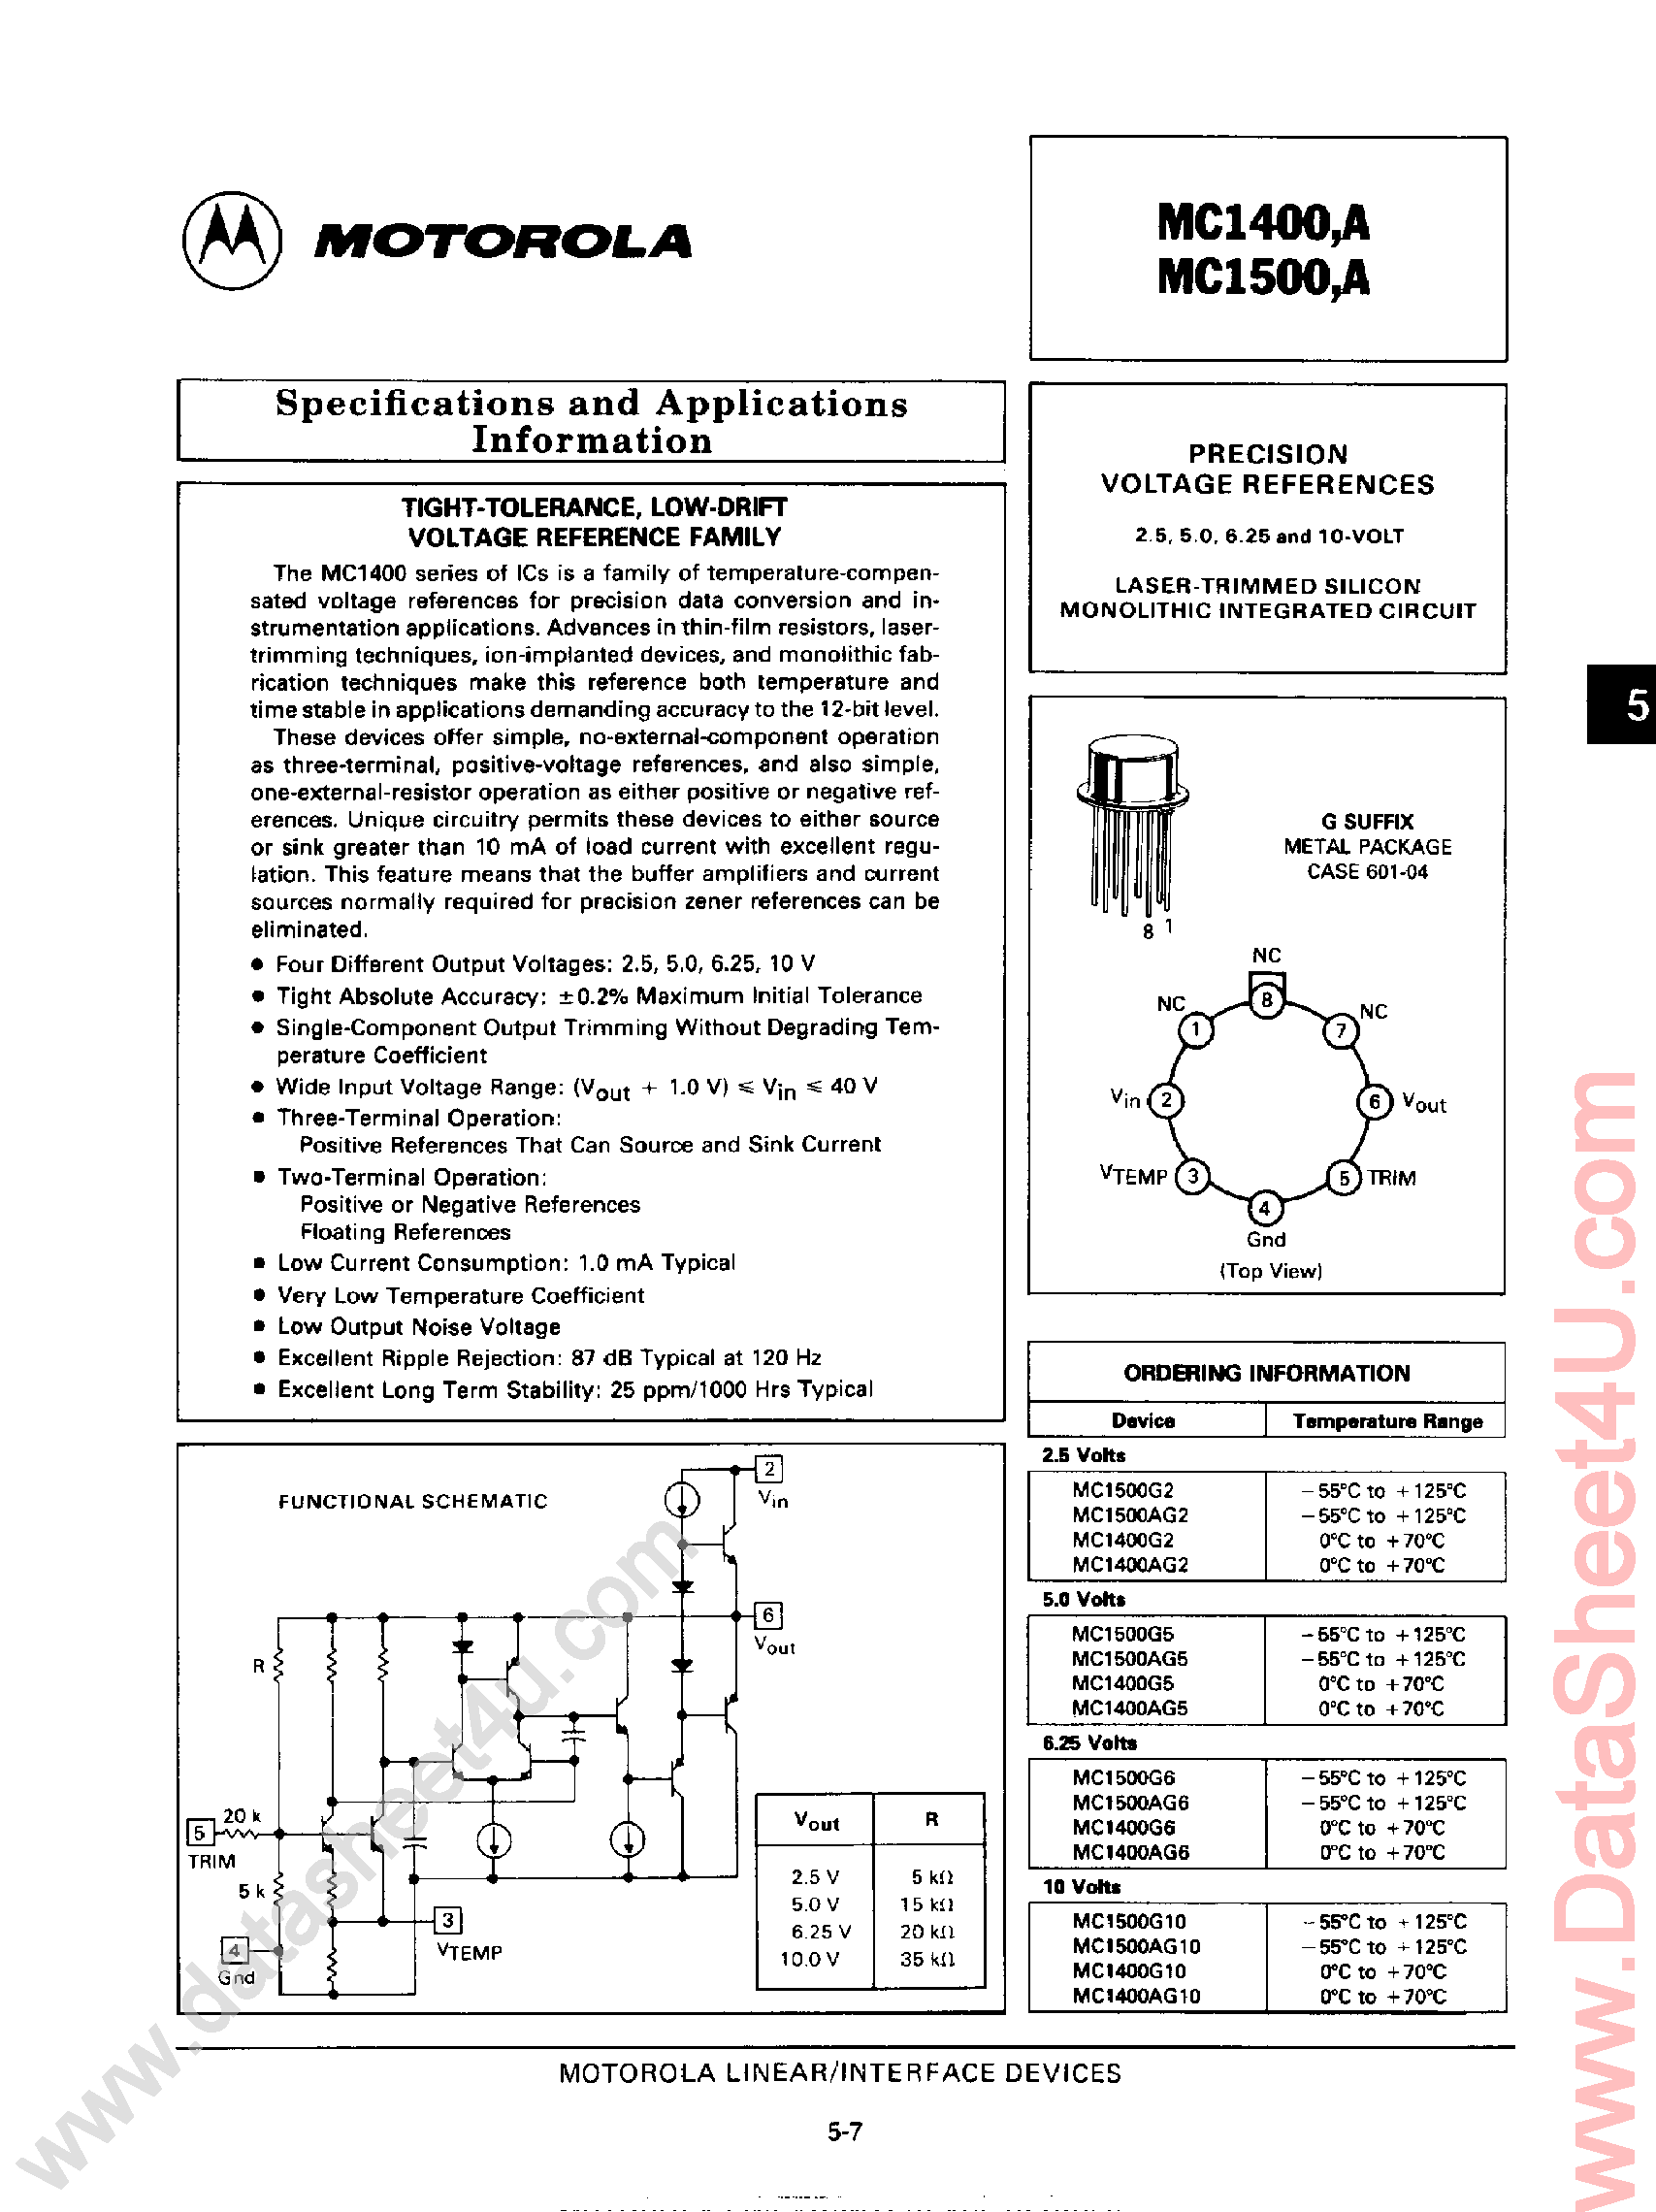 Даташит MC1400 - (MC1500 / MC1400) Laser Trimmed Silicon Monolithic Integrated Circuit страница 1